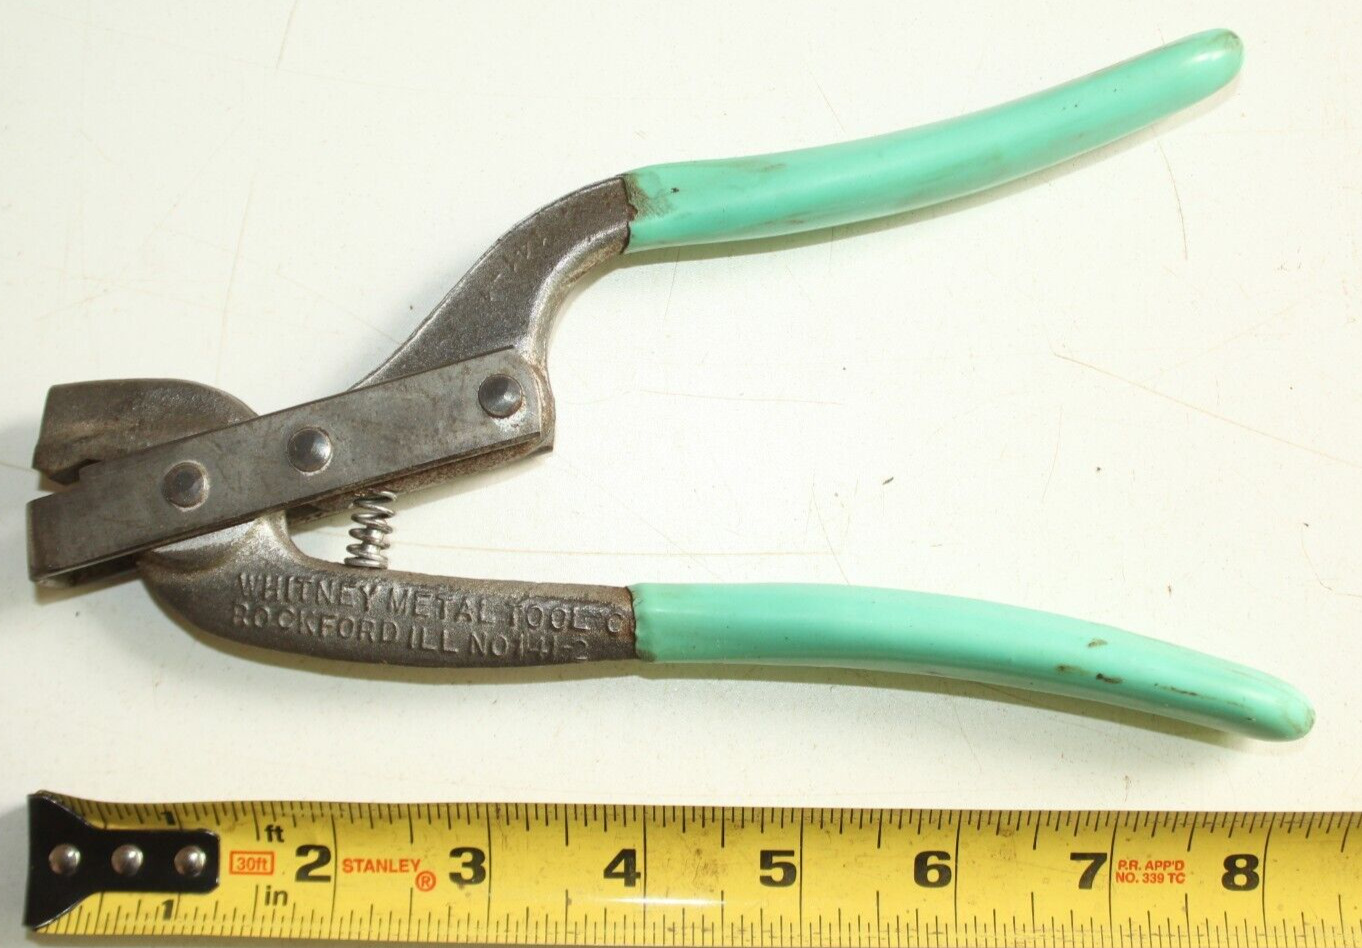 m) Vintage Whitney Metal Tool Co. No.141-2 Metalworking Tool PAT 2224226